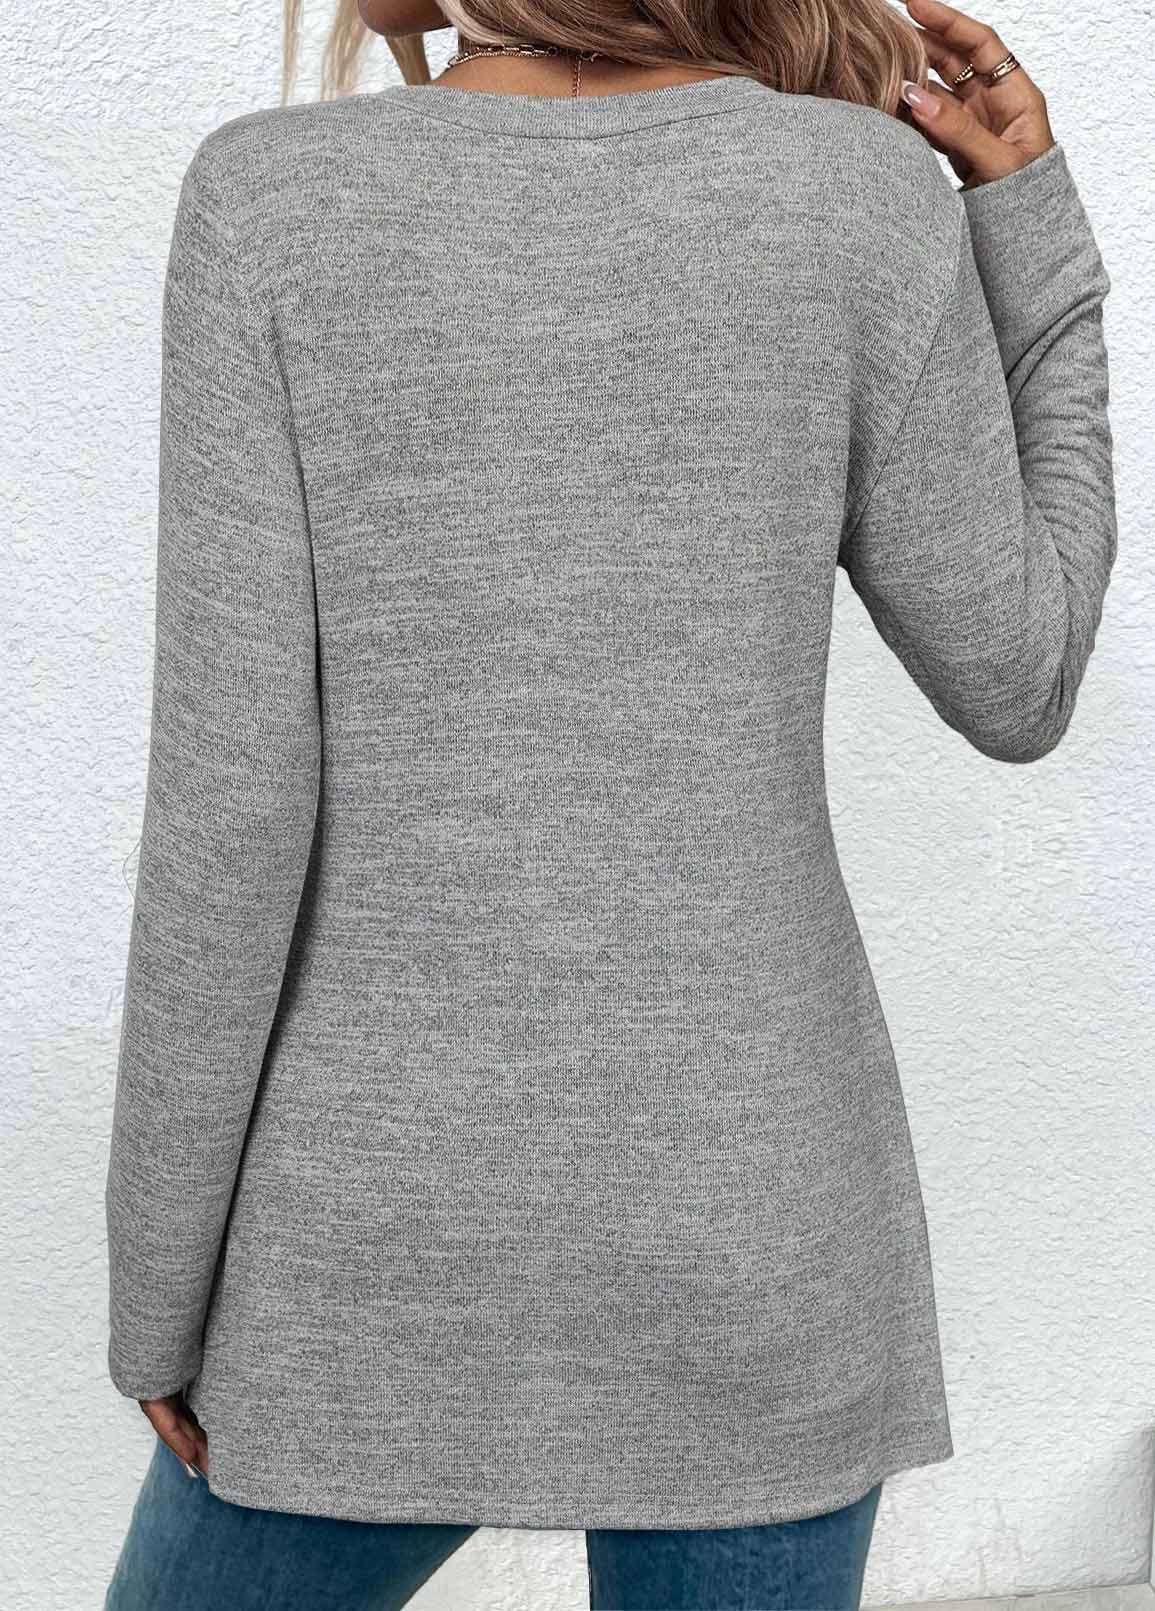 Long Sleeve Asymmetry Grey Round Neck T Shirt